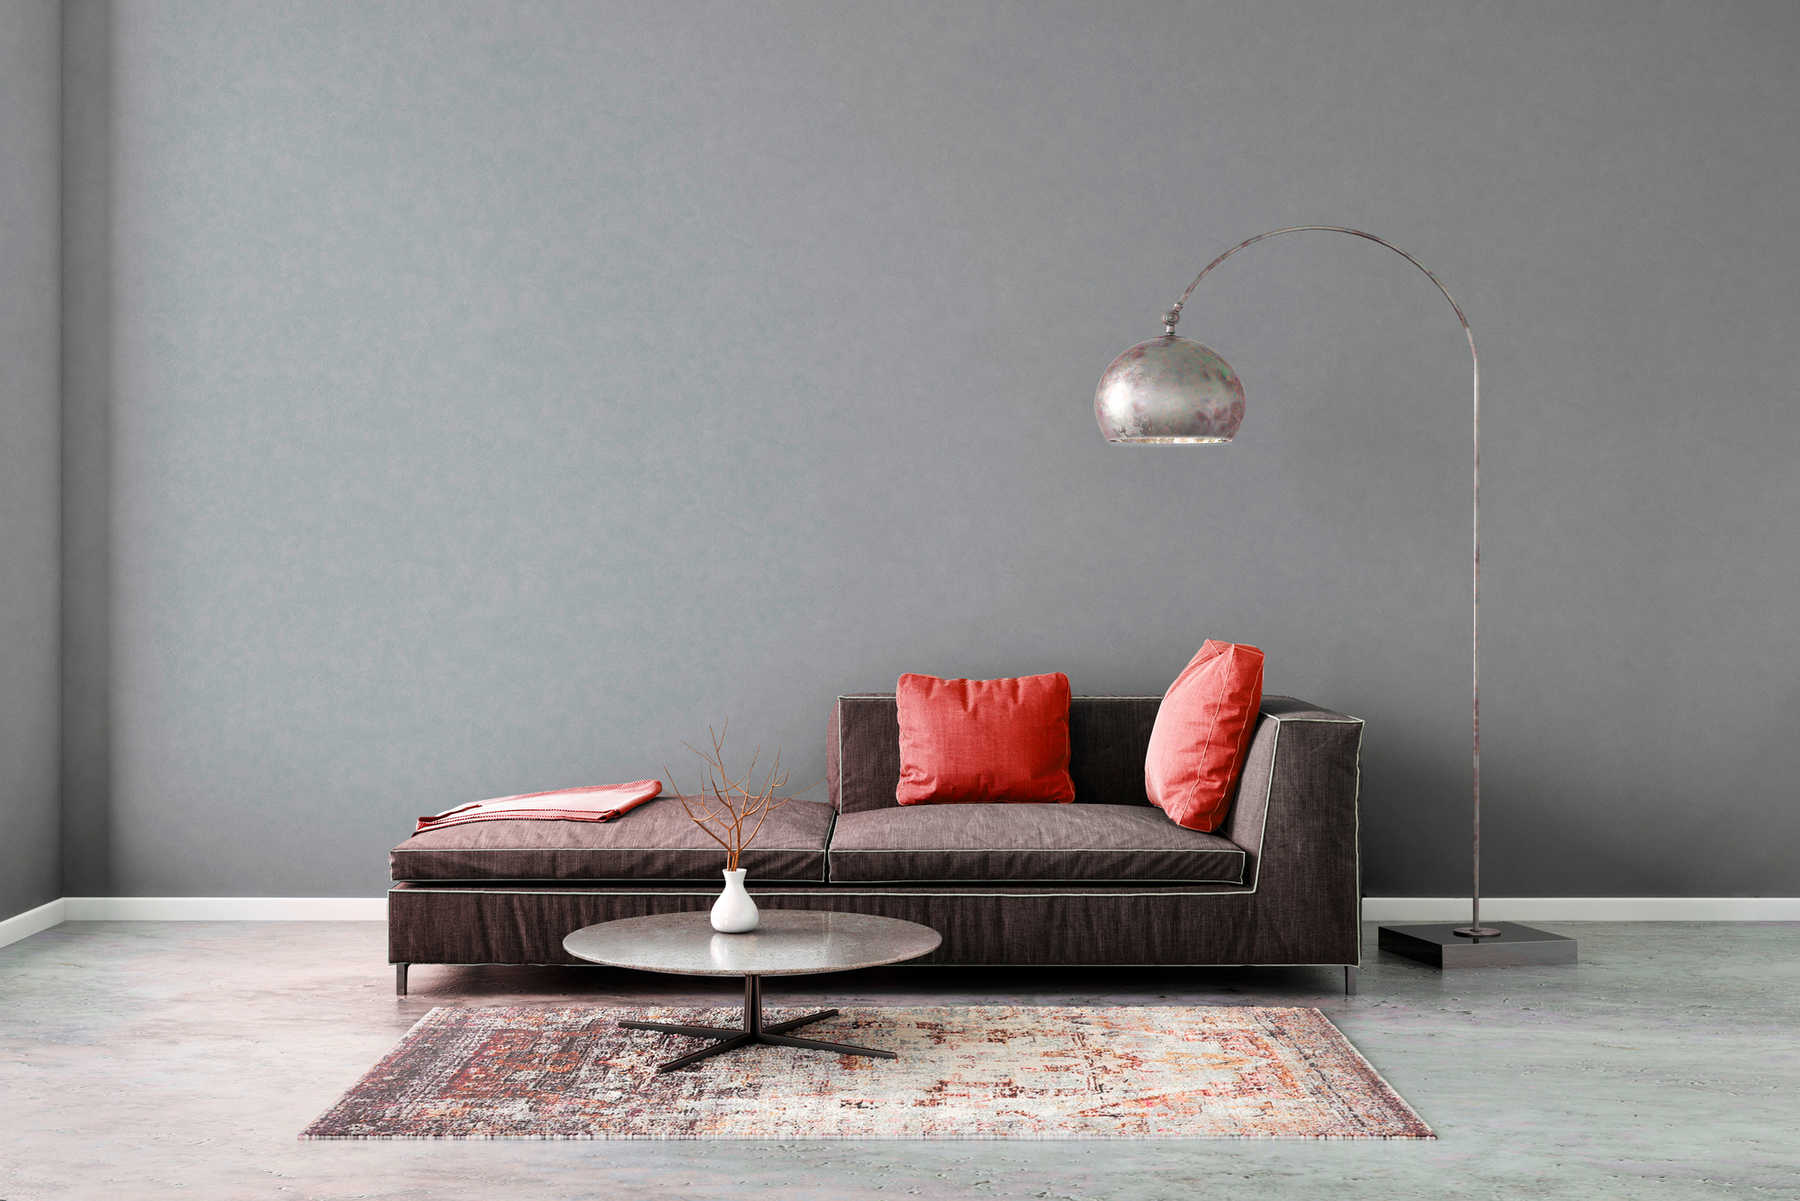             Light grey wallpaper with plaster look design & mottled colour
        